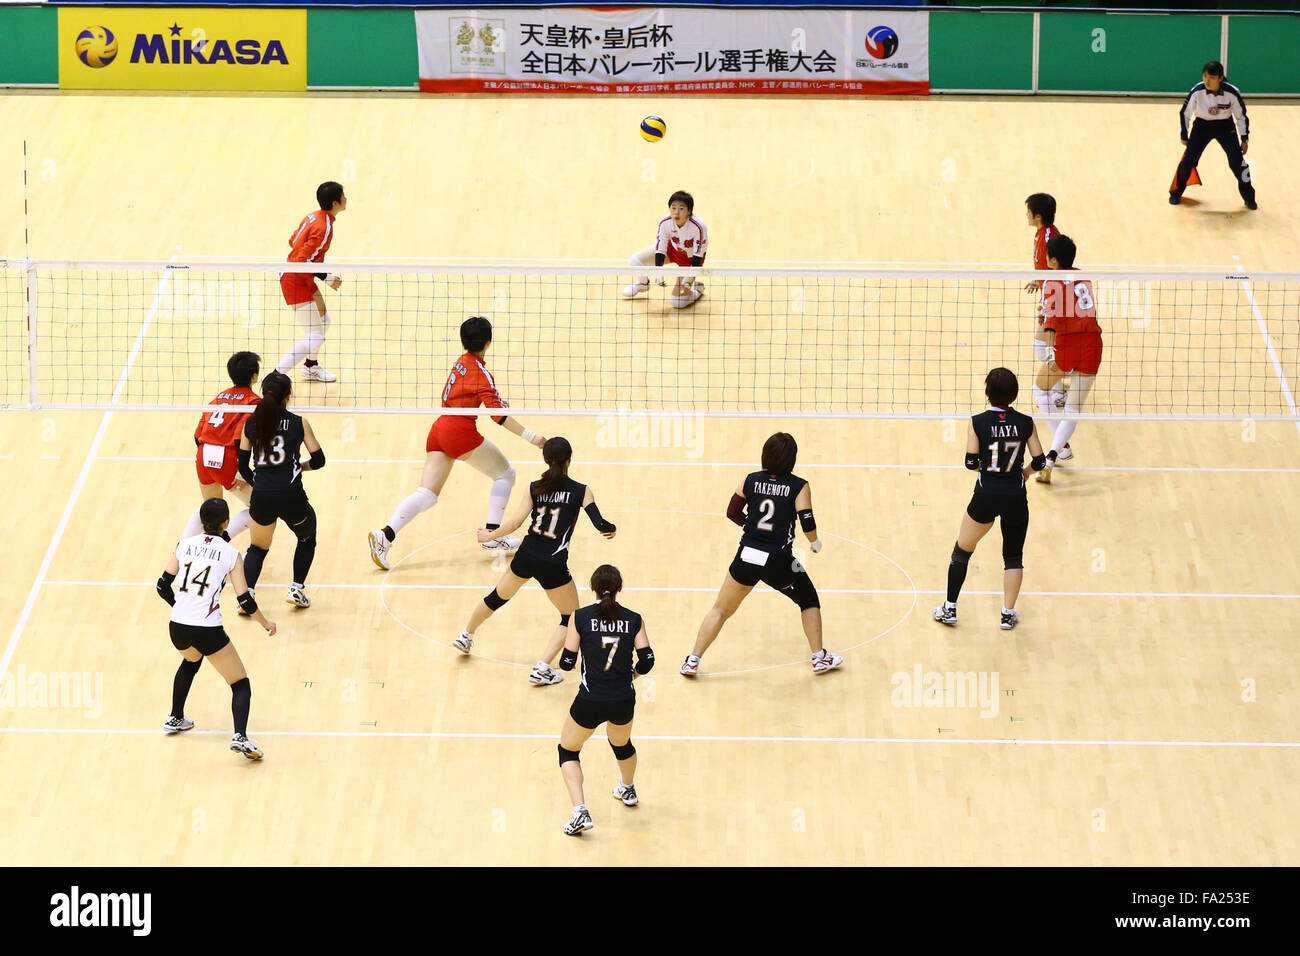 High School Volleyball Match In Immagini E Fotos Stock Alamy